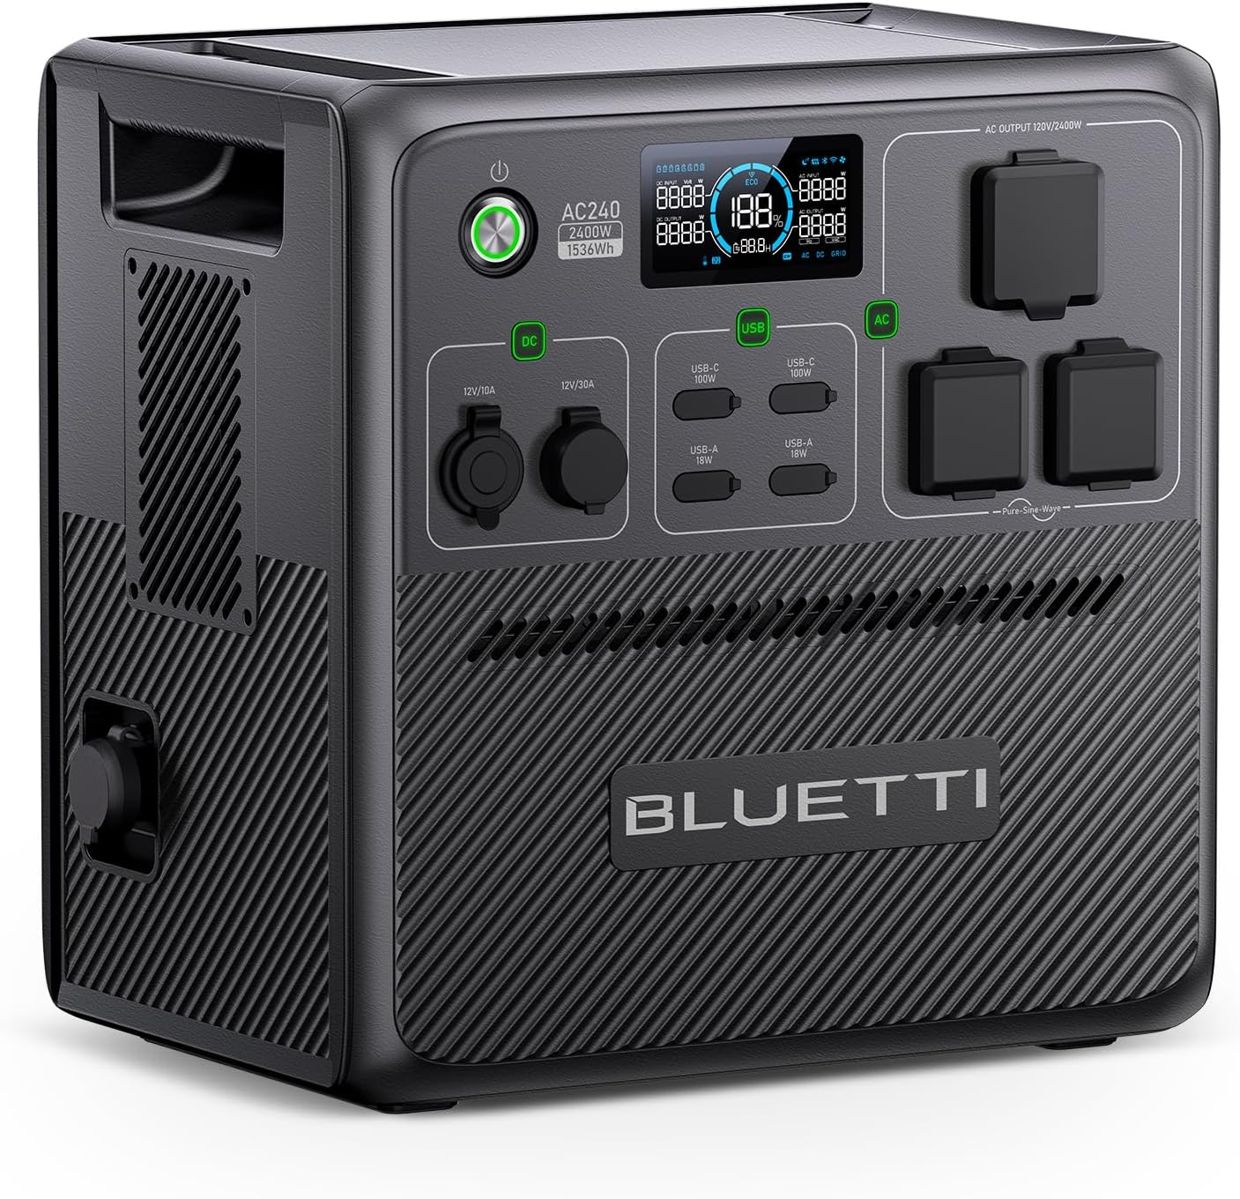 Bluetti AC240 Battery Electric Generator